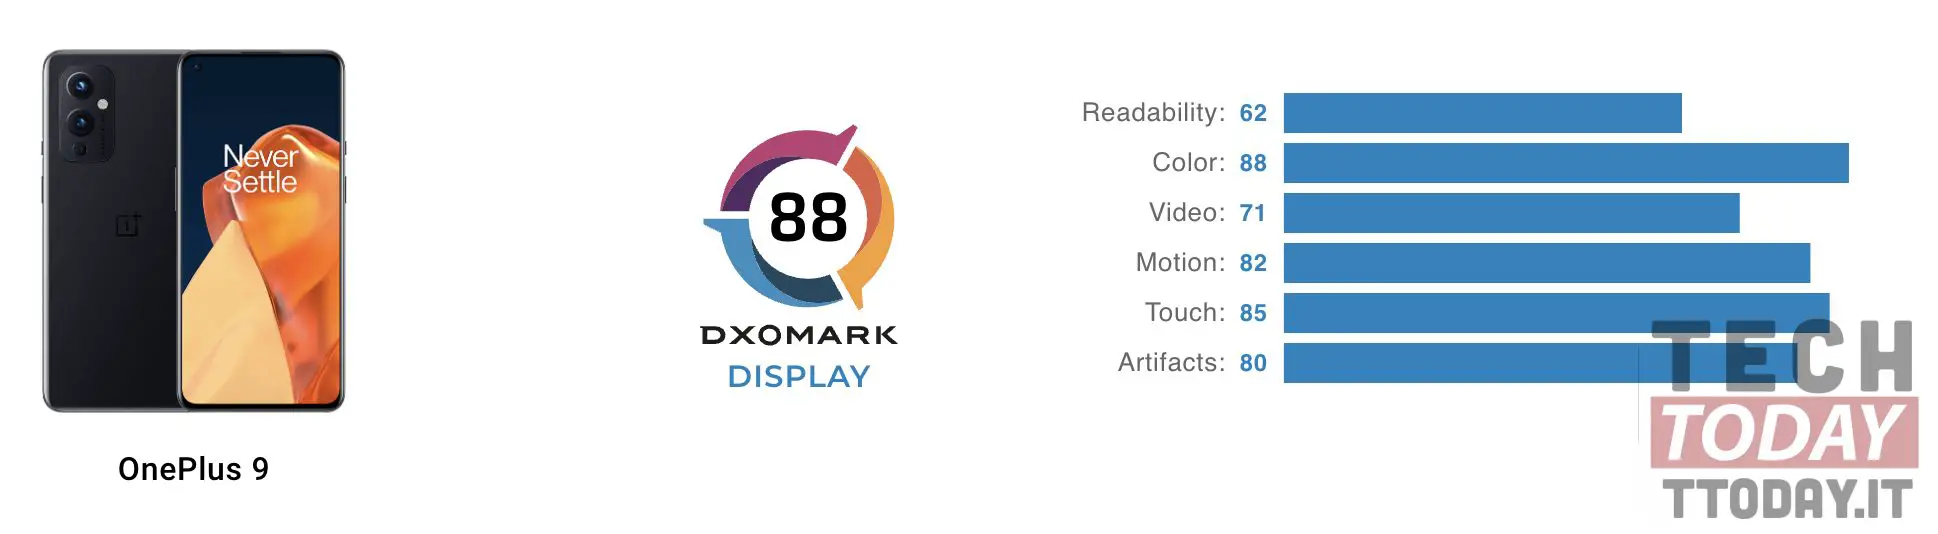 oneplus 9: dxomark display